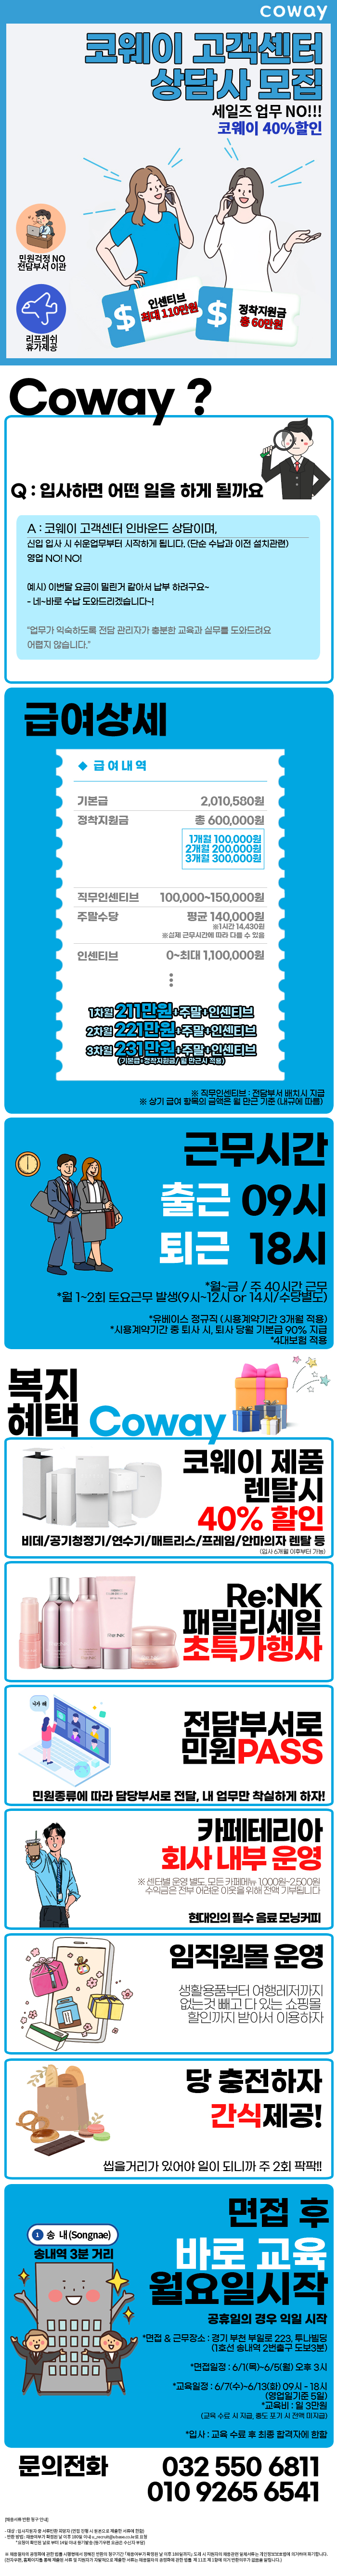 [coway] 정규직/대표번호 인바운드 상담